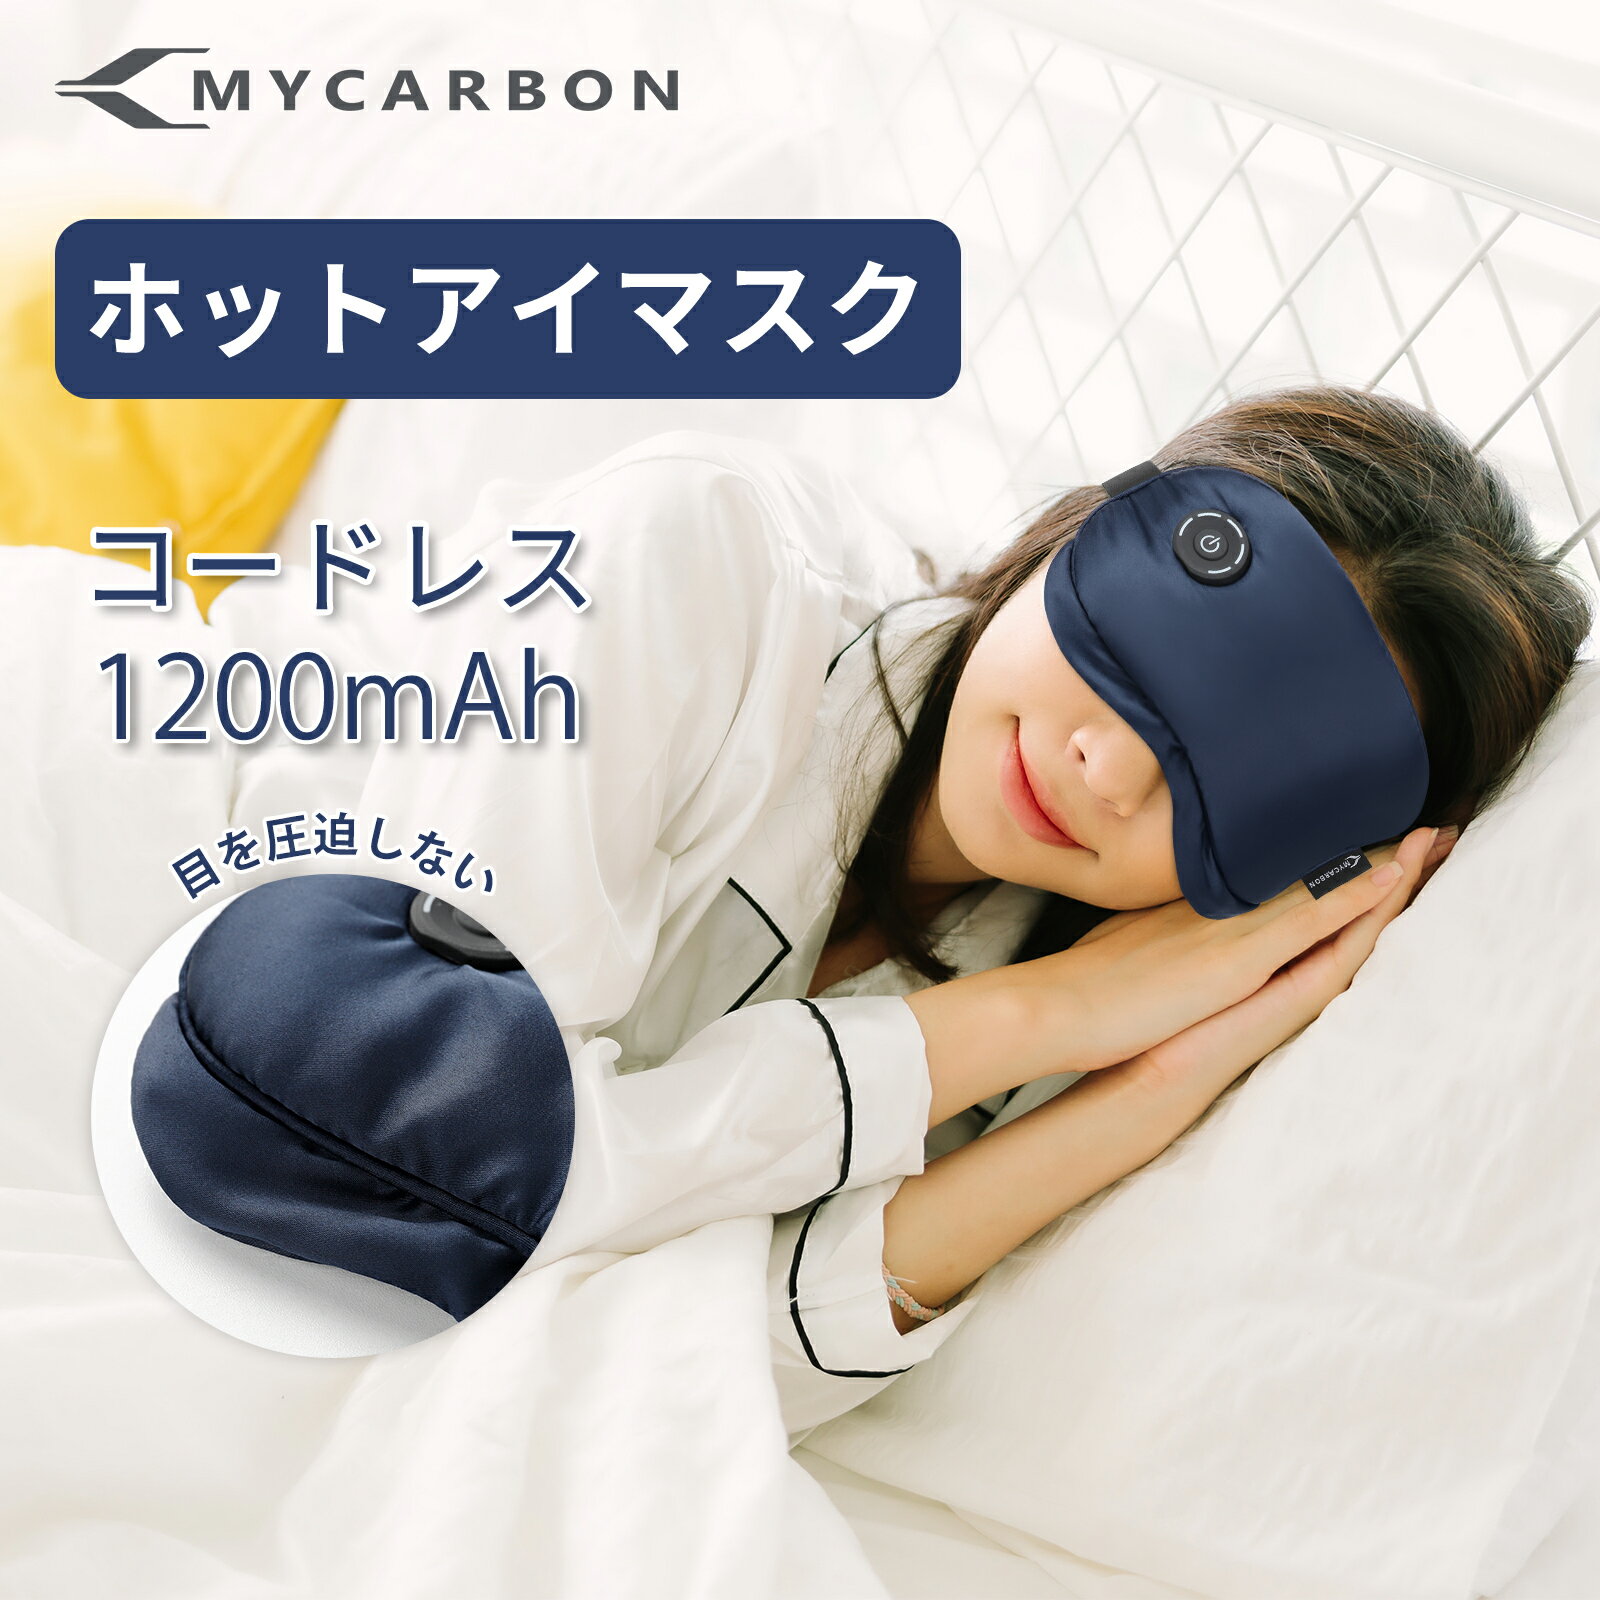 MYCARBON 充電式 ホットアイマスク 安眠グッズ リラックス アイマスク ギフト かわいい USB シルク 安..